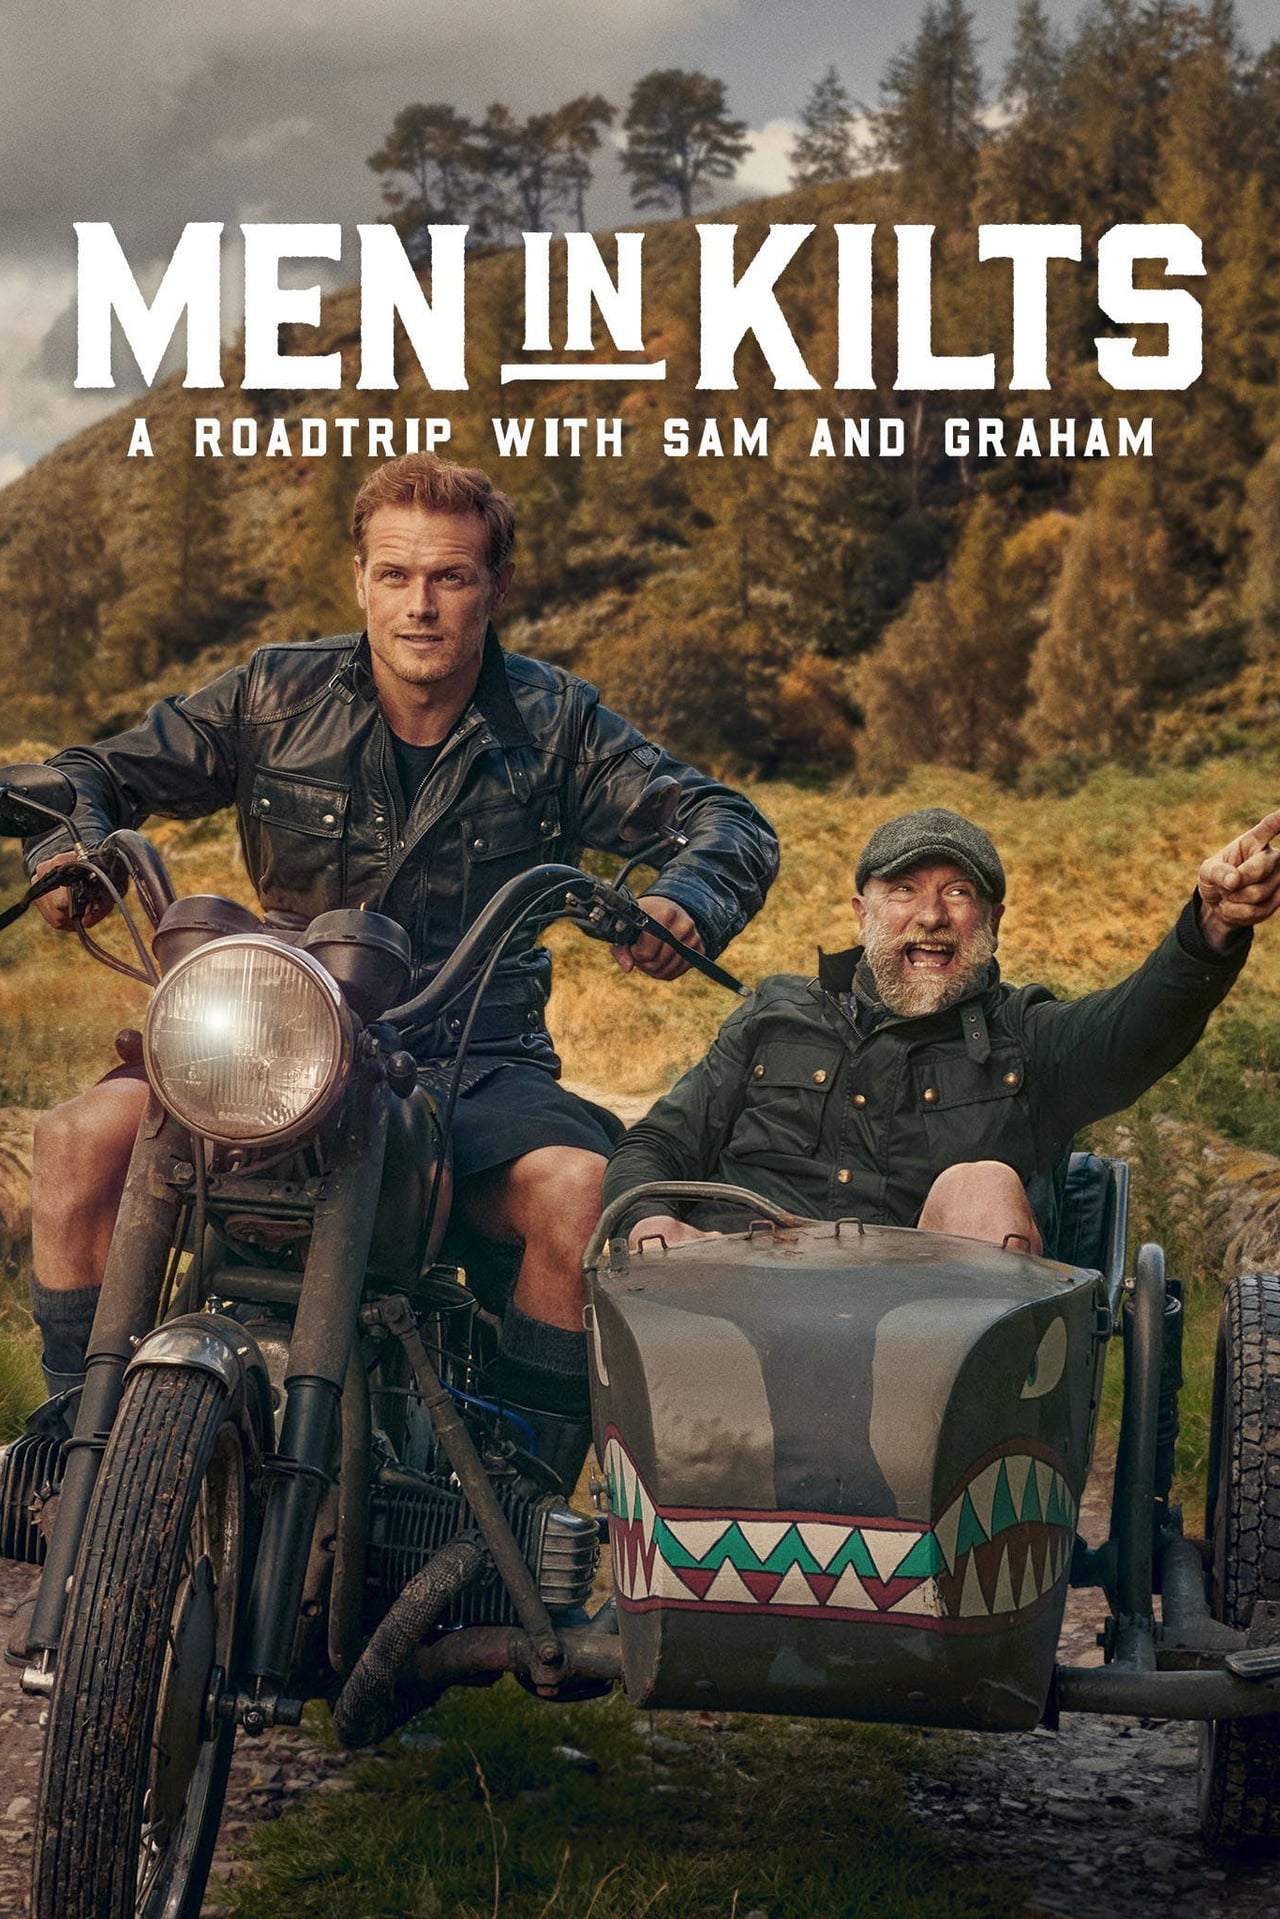 Men in Kilts: A Roadtrip with Sam and Graham (season 1)